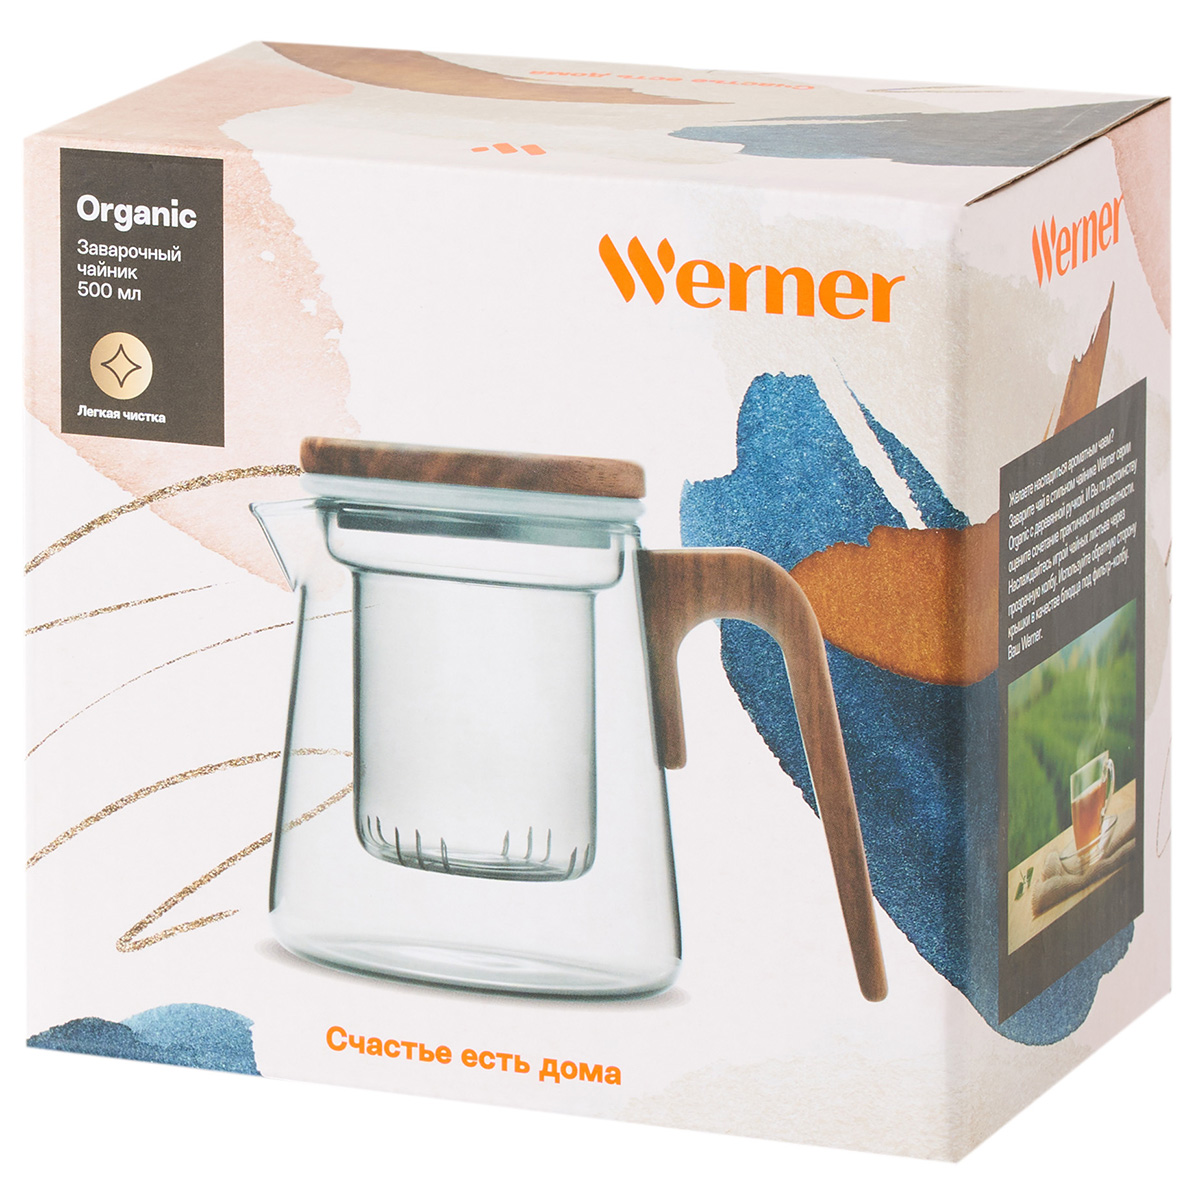 Заварочный чайник Werner Organic 51891 500 мл фото